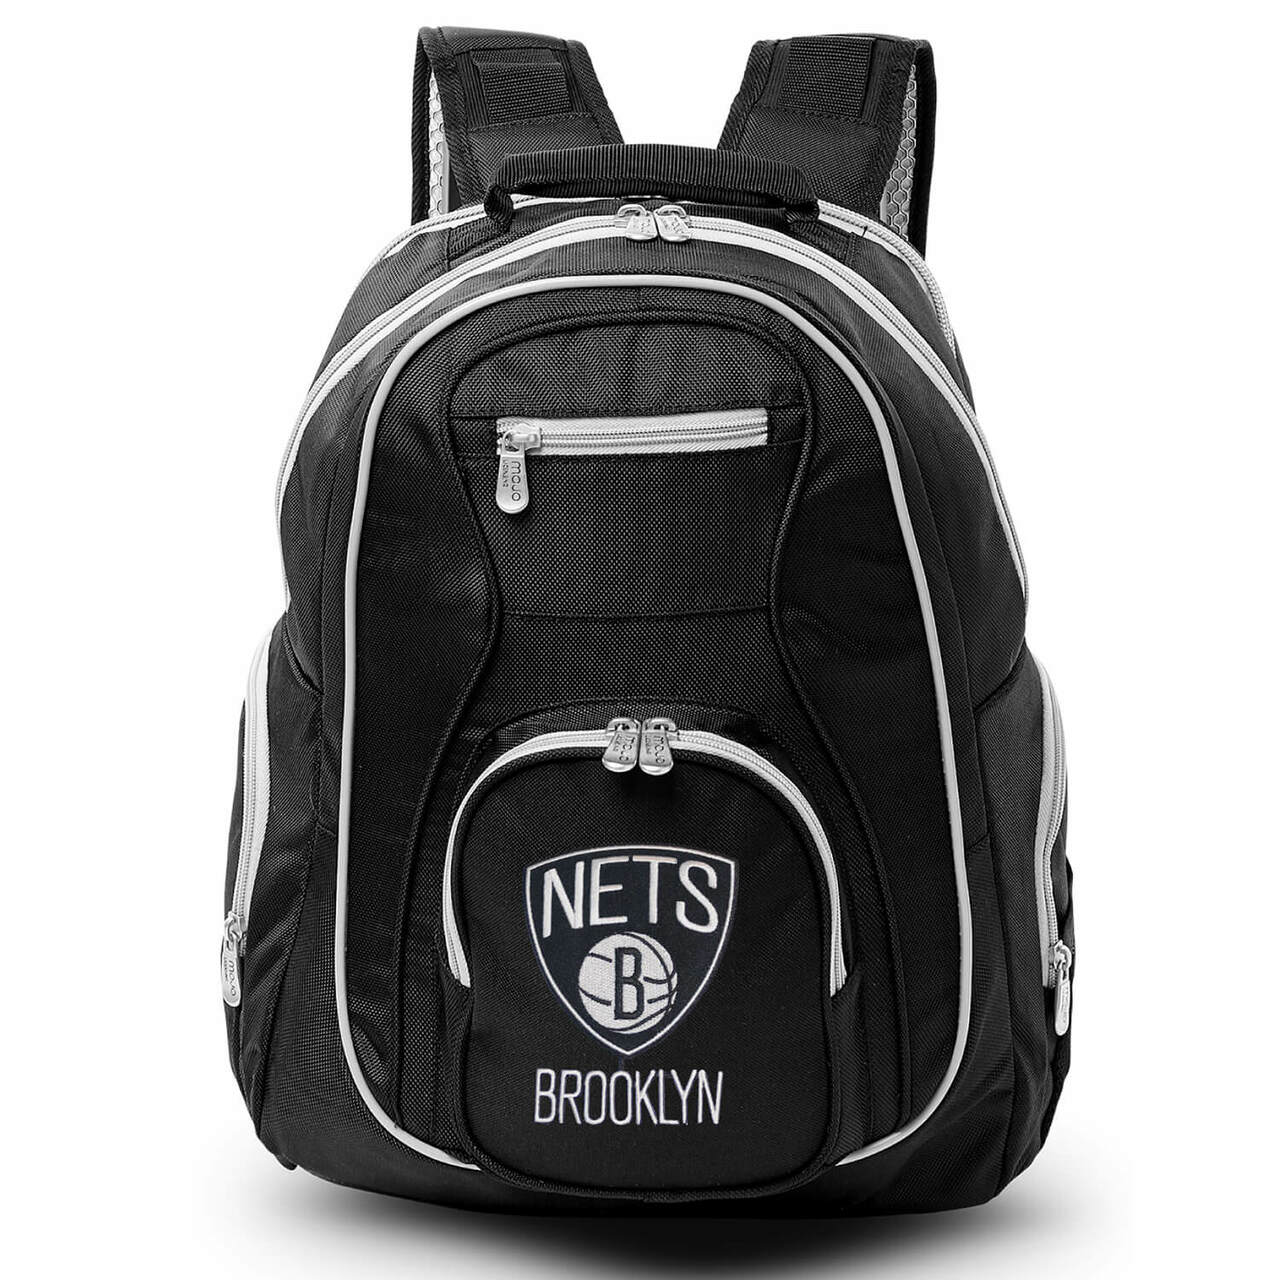 Nets Backpack | Brooklyn Nets Laptop Backpack